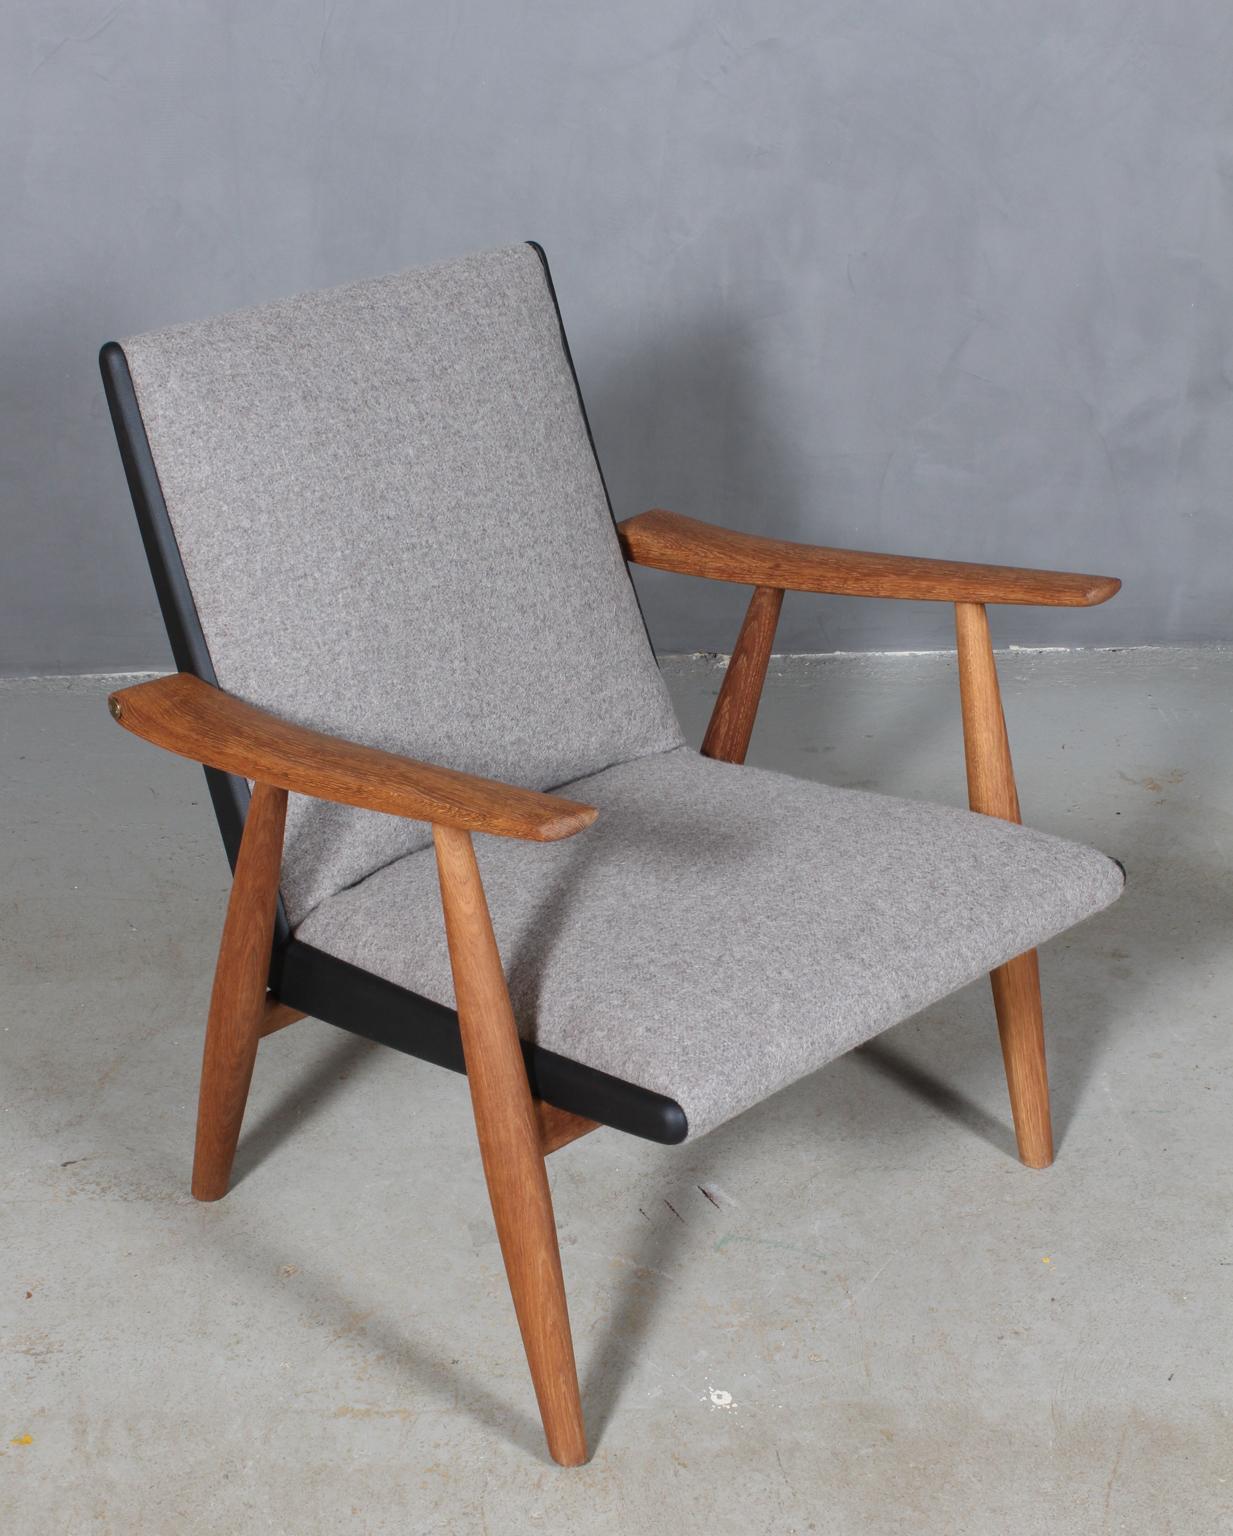 Hans J. Wegner model Ge-260 new upholstered with wool and leather.

Renovated oak frame. Brass screws.

Model Ge-260, made by Getama, 1960s, Denmark.